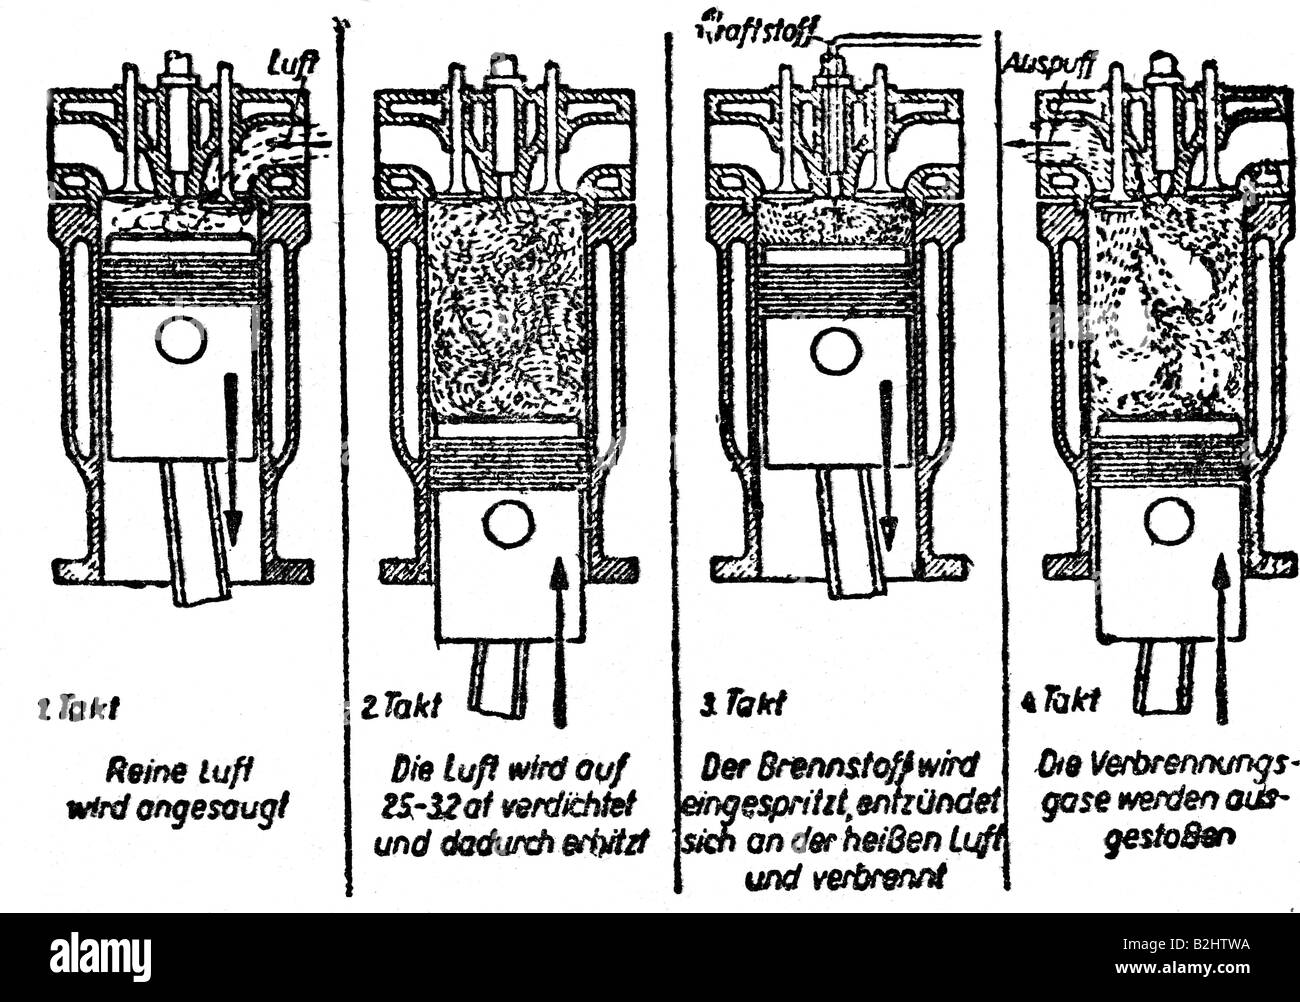 Diesel, Rudolf Christian Karl, 18.3.1858 - 29.9.1913, ingegnere tedesco, inventore, schema a quattro tempi di un motore diesel, Foto Stock